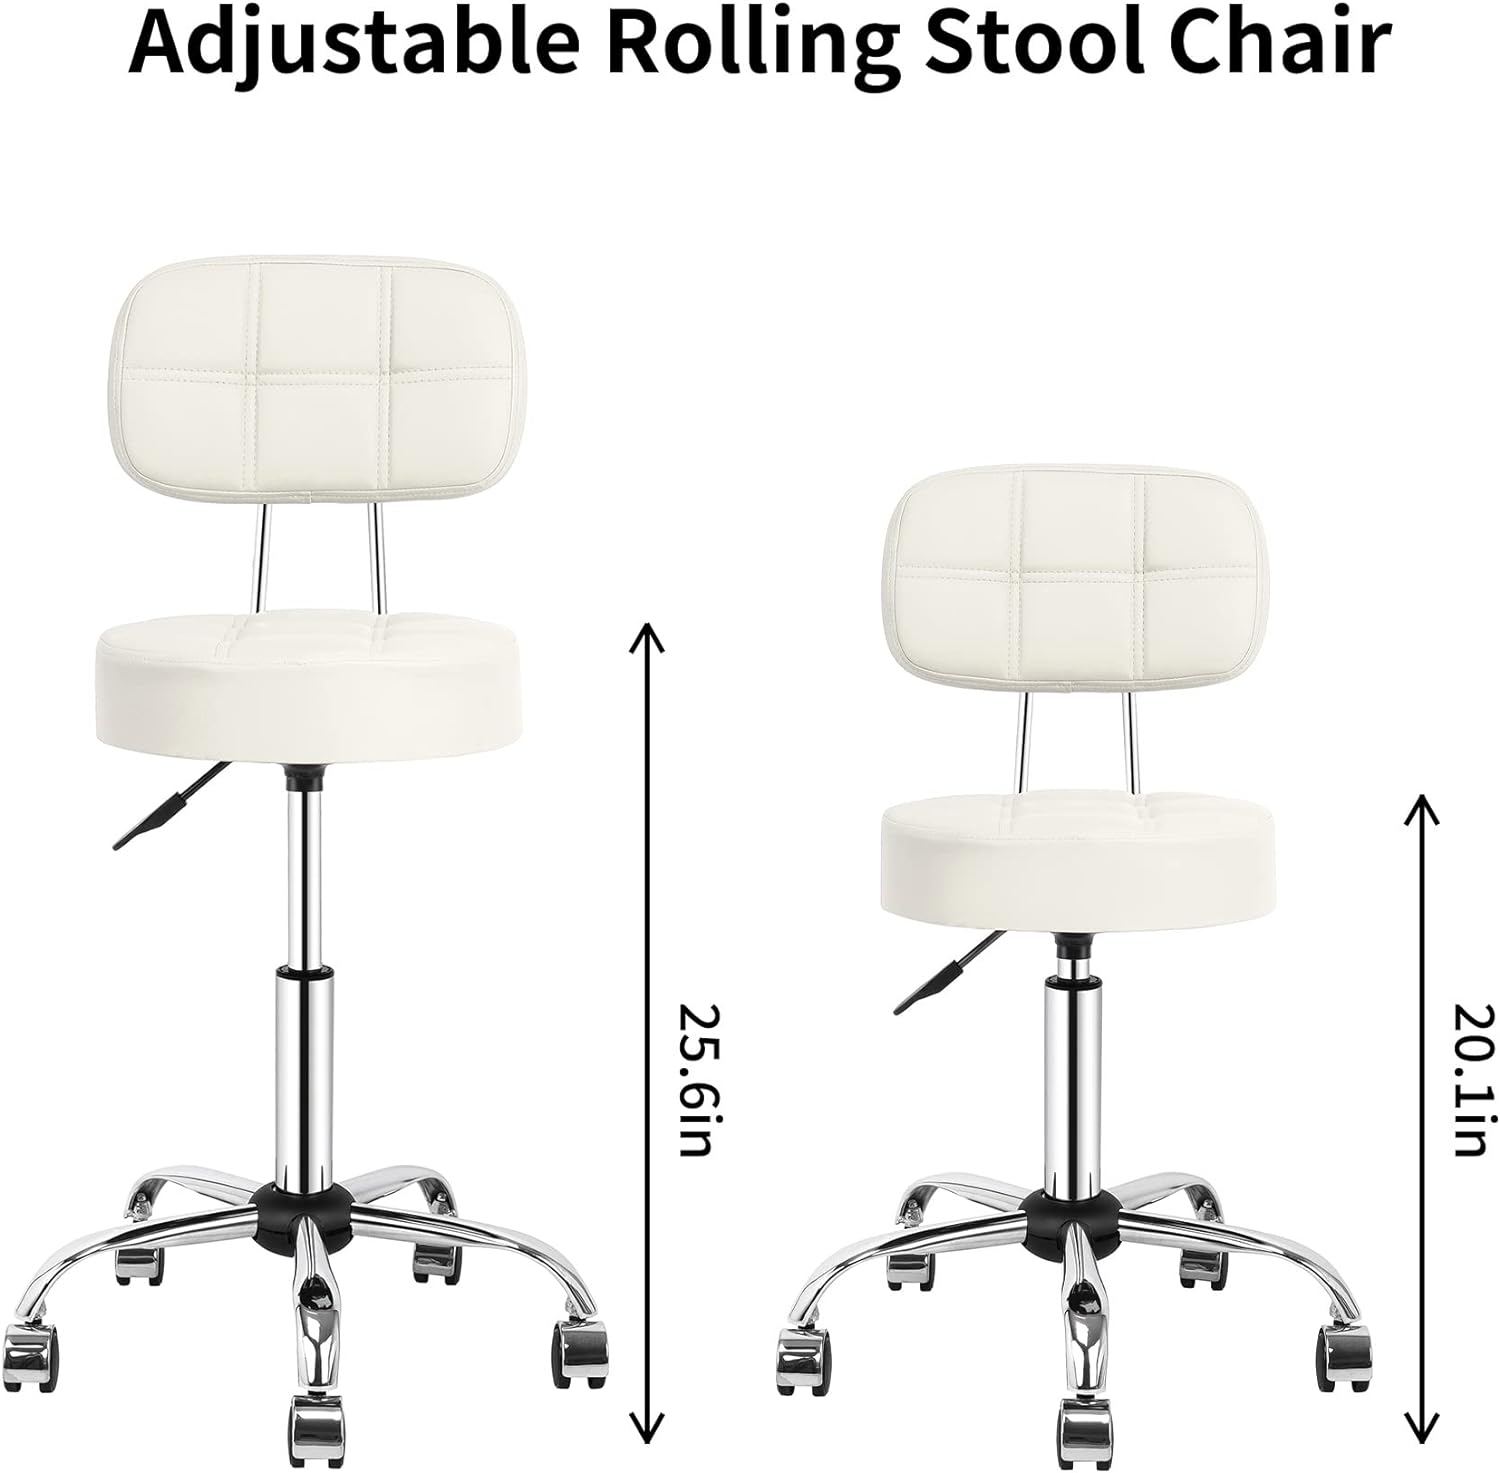 Taburete giratorio con ruedas de respaldo alto, sillas de dibujo ajustables en